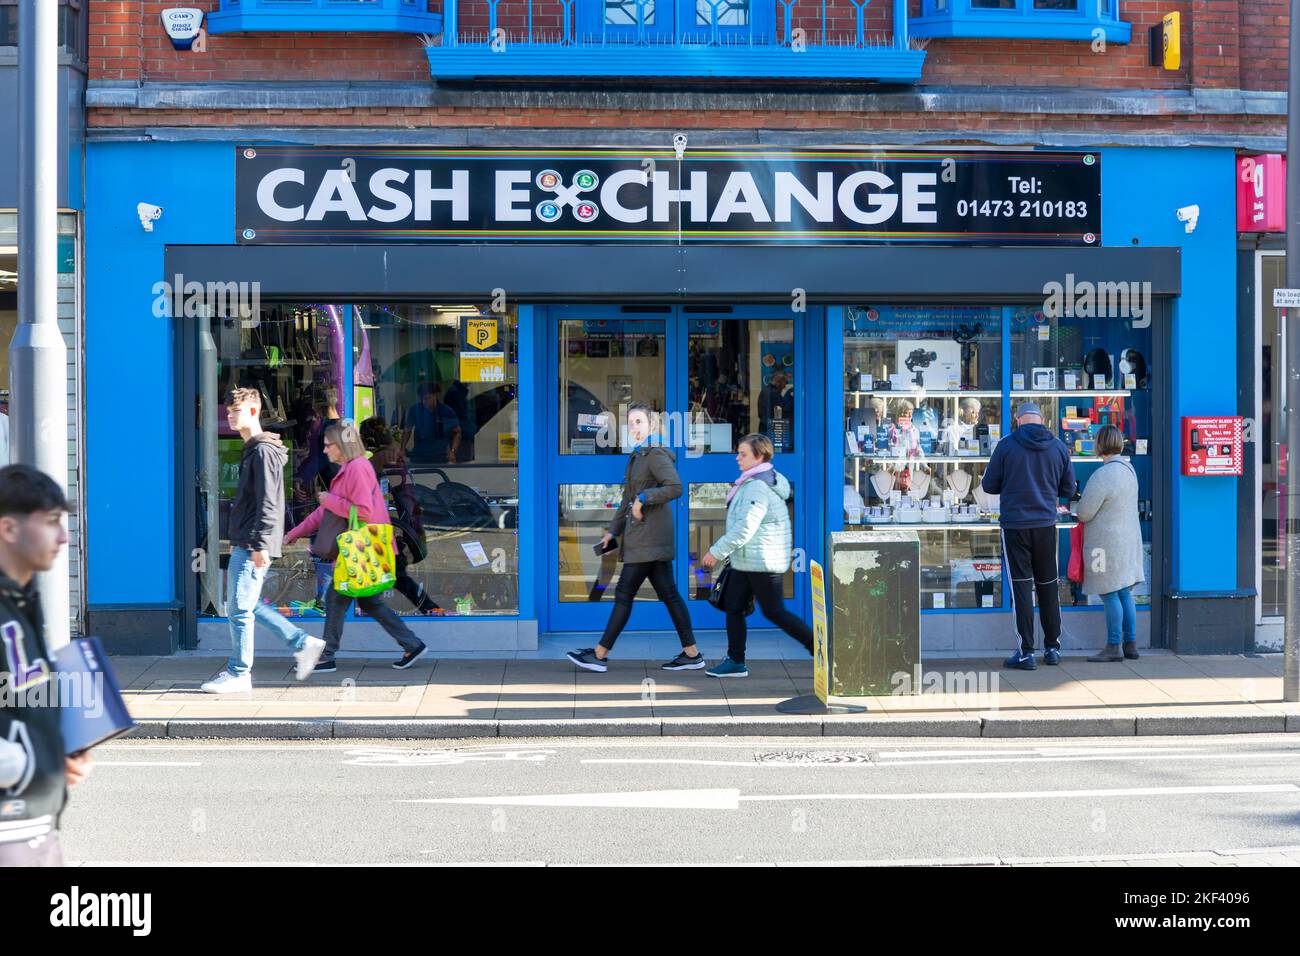 Cash Exchange pawnbrokers shop, Ipswich, Suffolk, England, UK Stock Photo